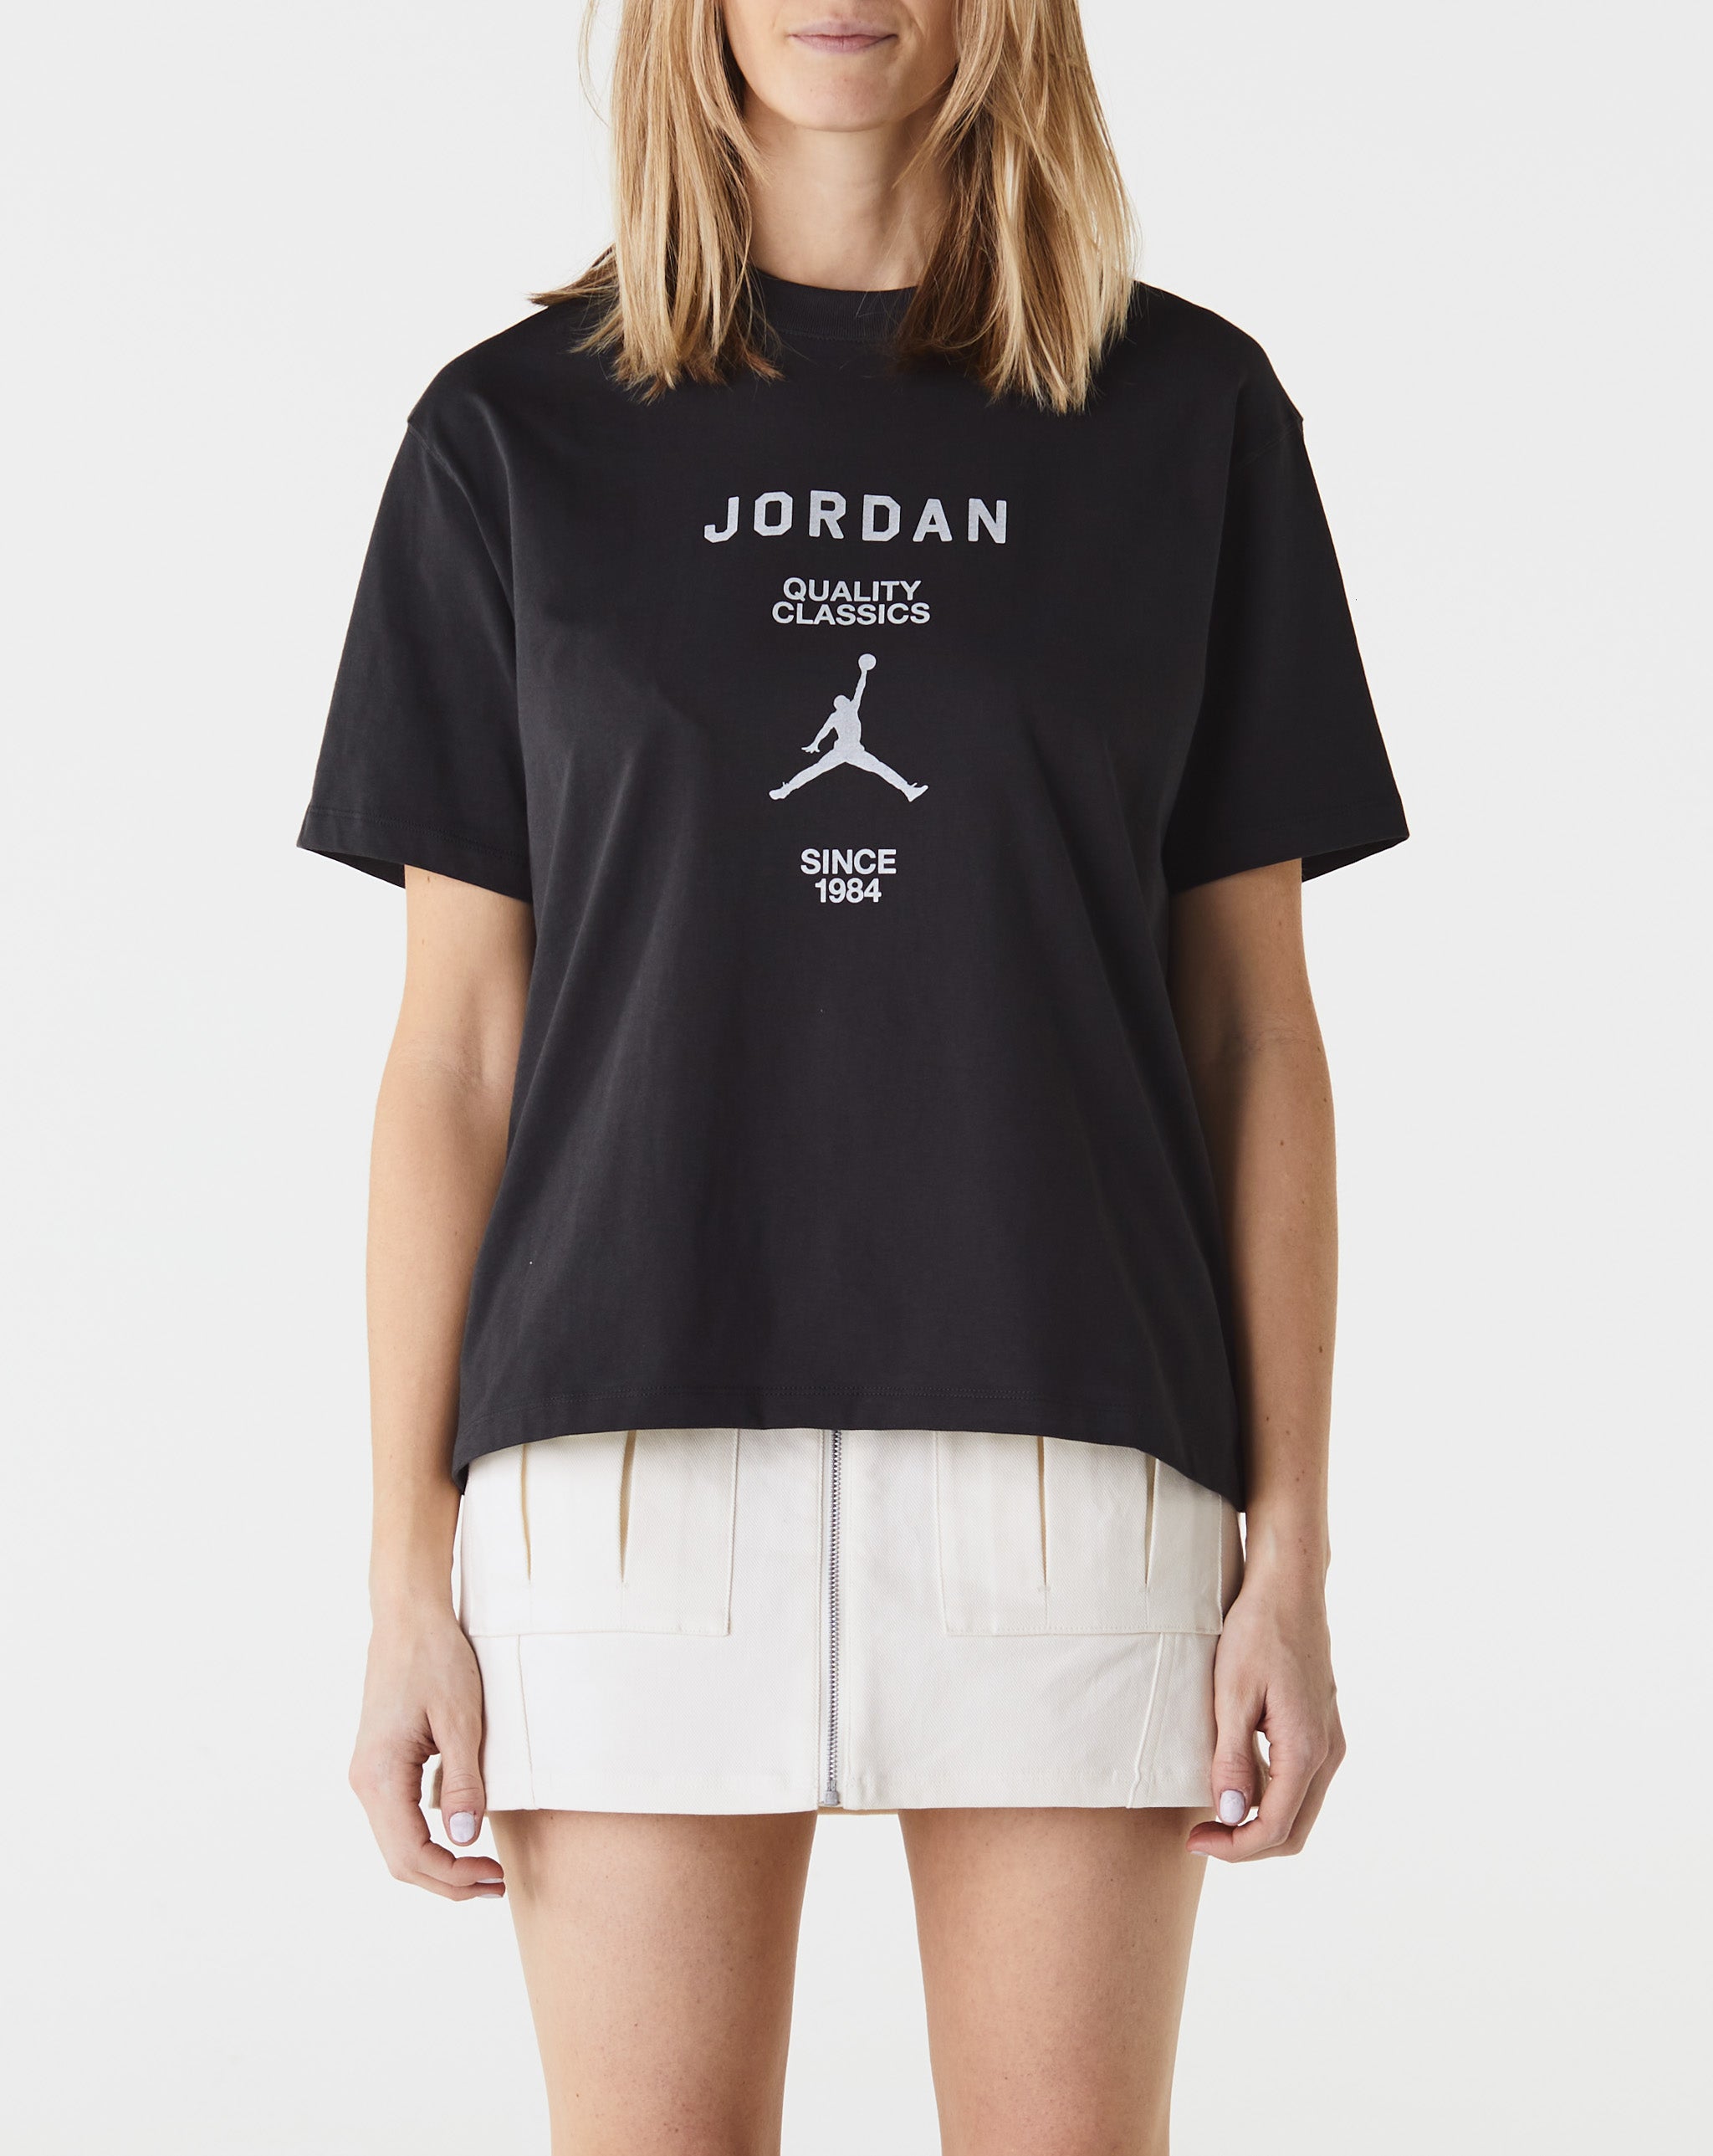 Air Jordan Women's Jordan Quality Classics T-Shirt  - Cheap 127-0 Jordan outlet